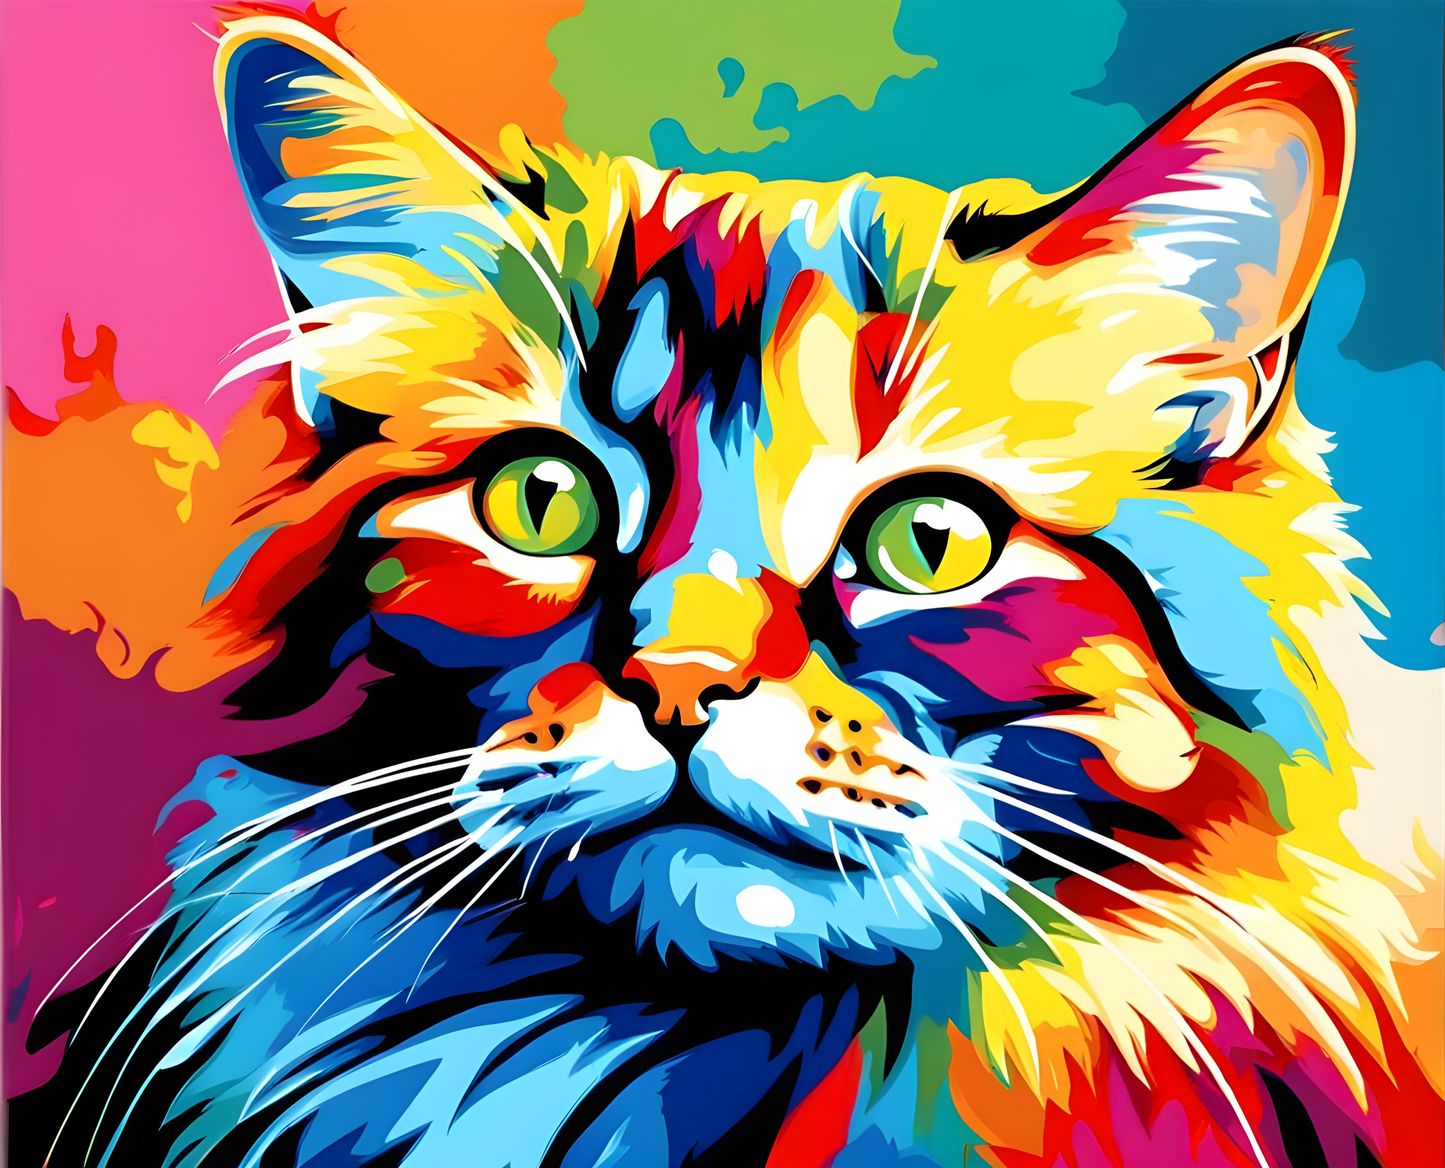 Colorful Cat (2) - Van-Go Paint-By-Number Kit